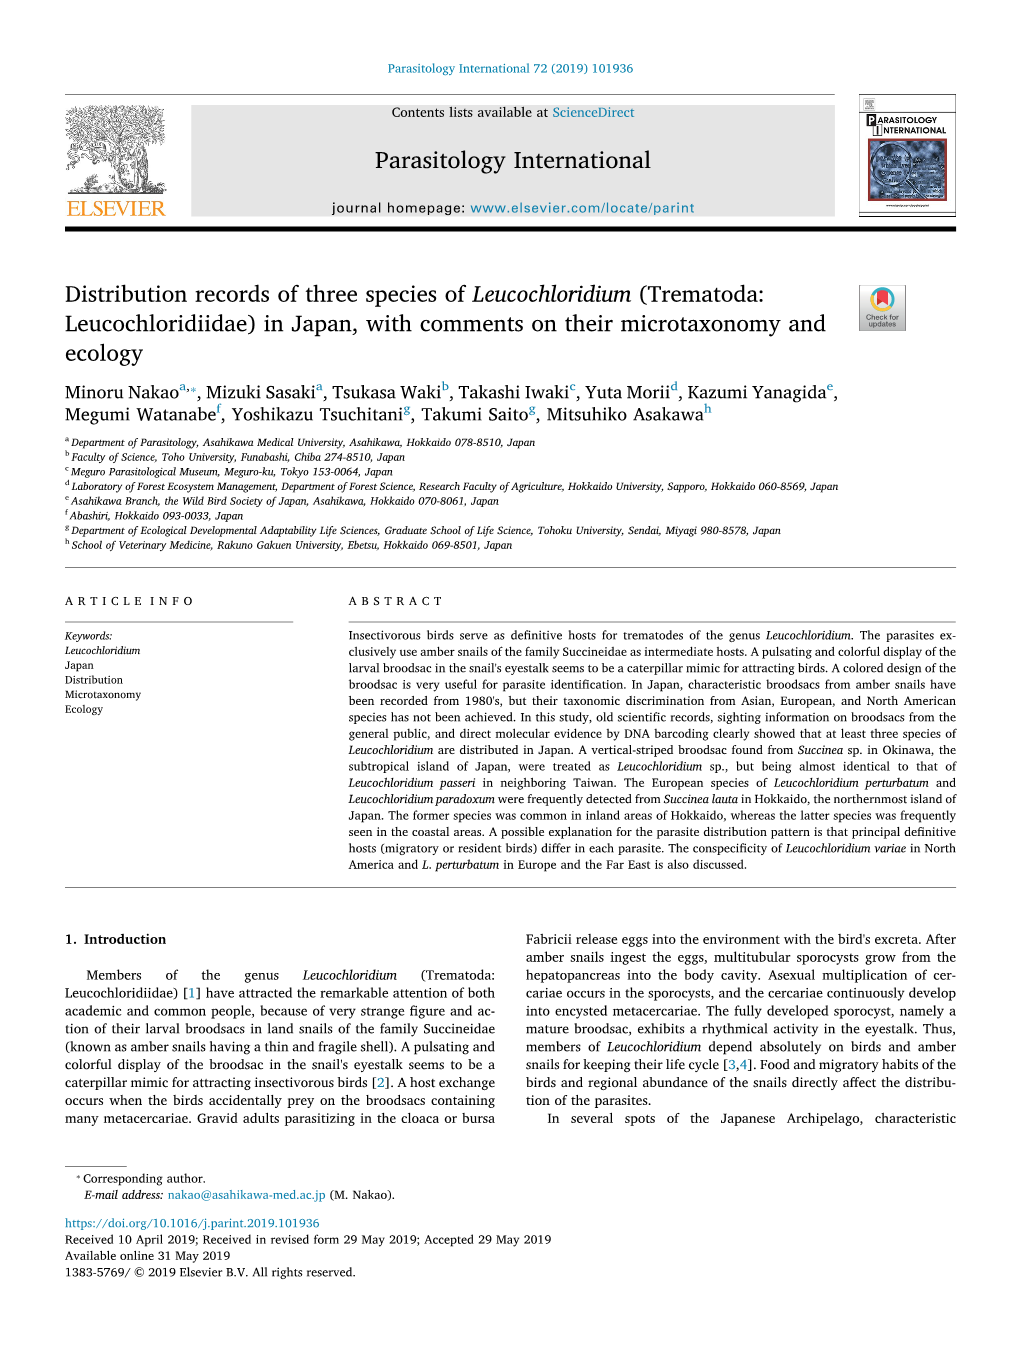 Distribution Records of Three Species of Leucochloridium